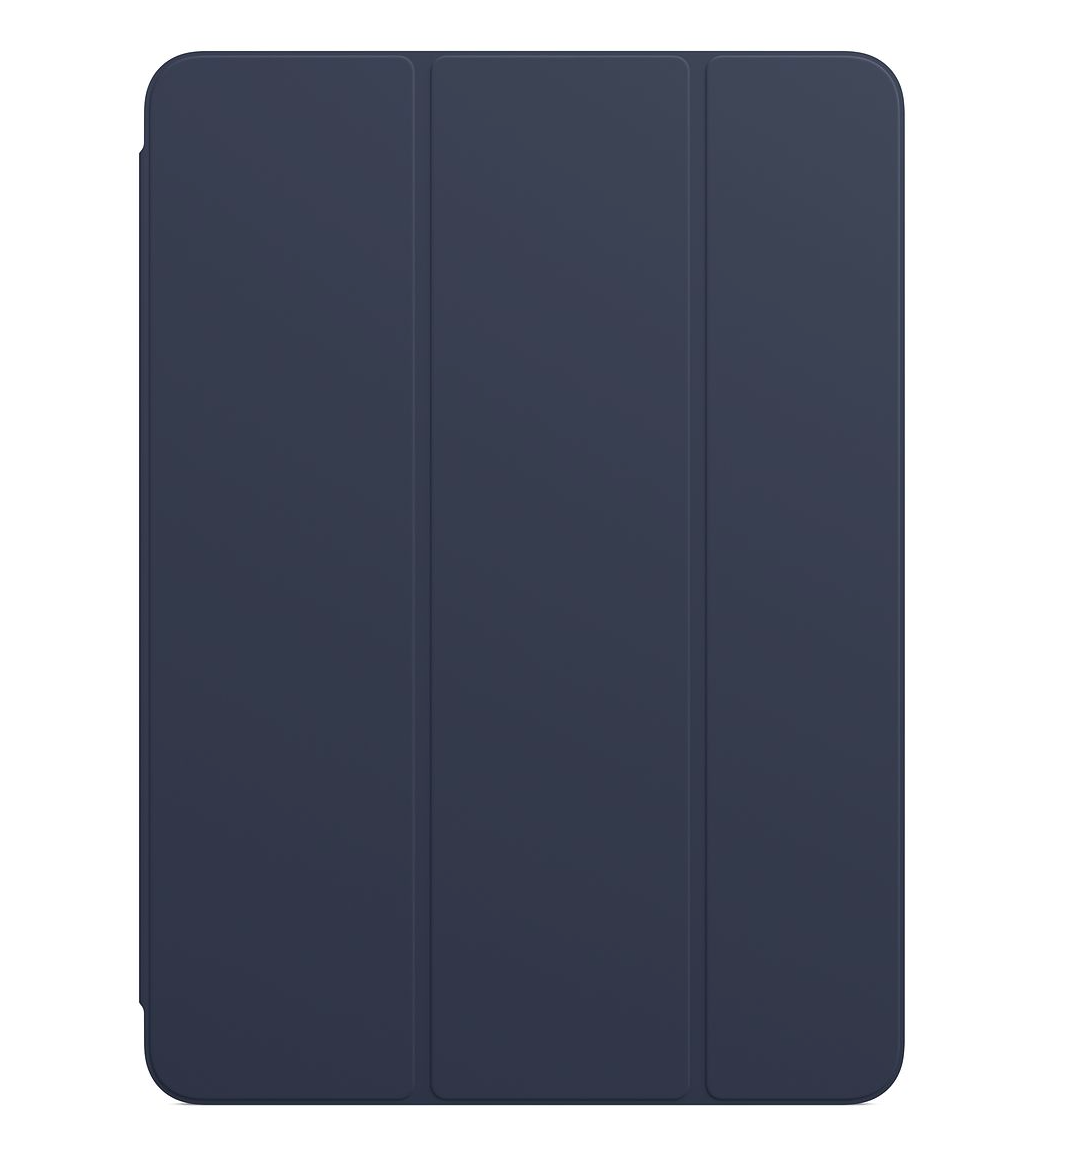 Smart Folio for iPad Pro 12.9-inch (4th Generation)